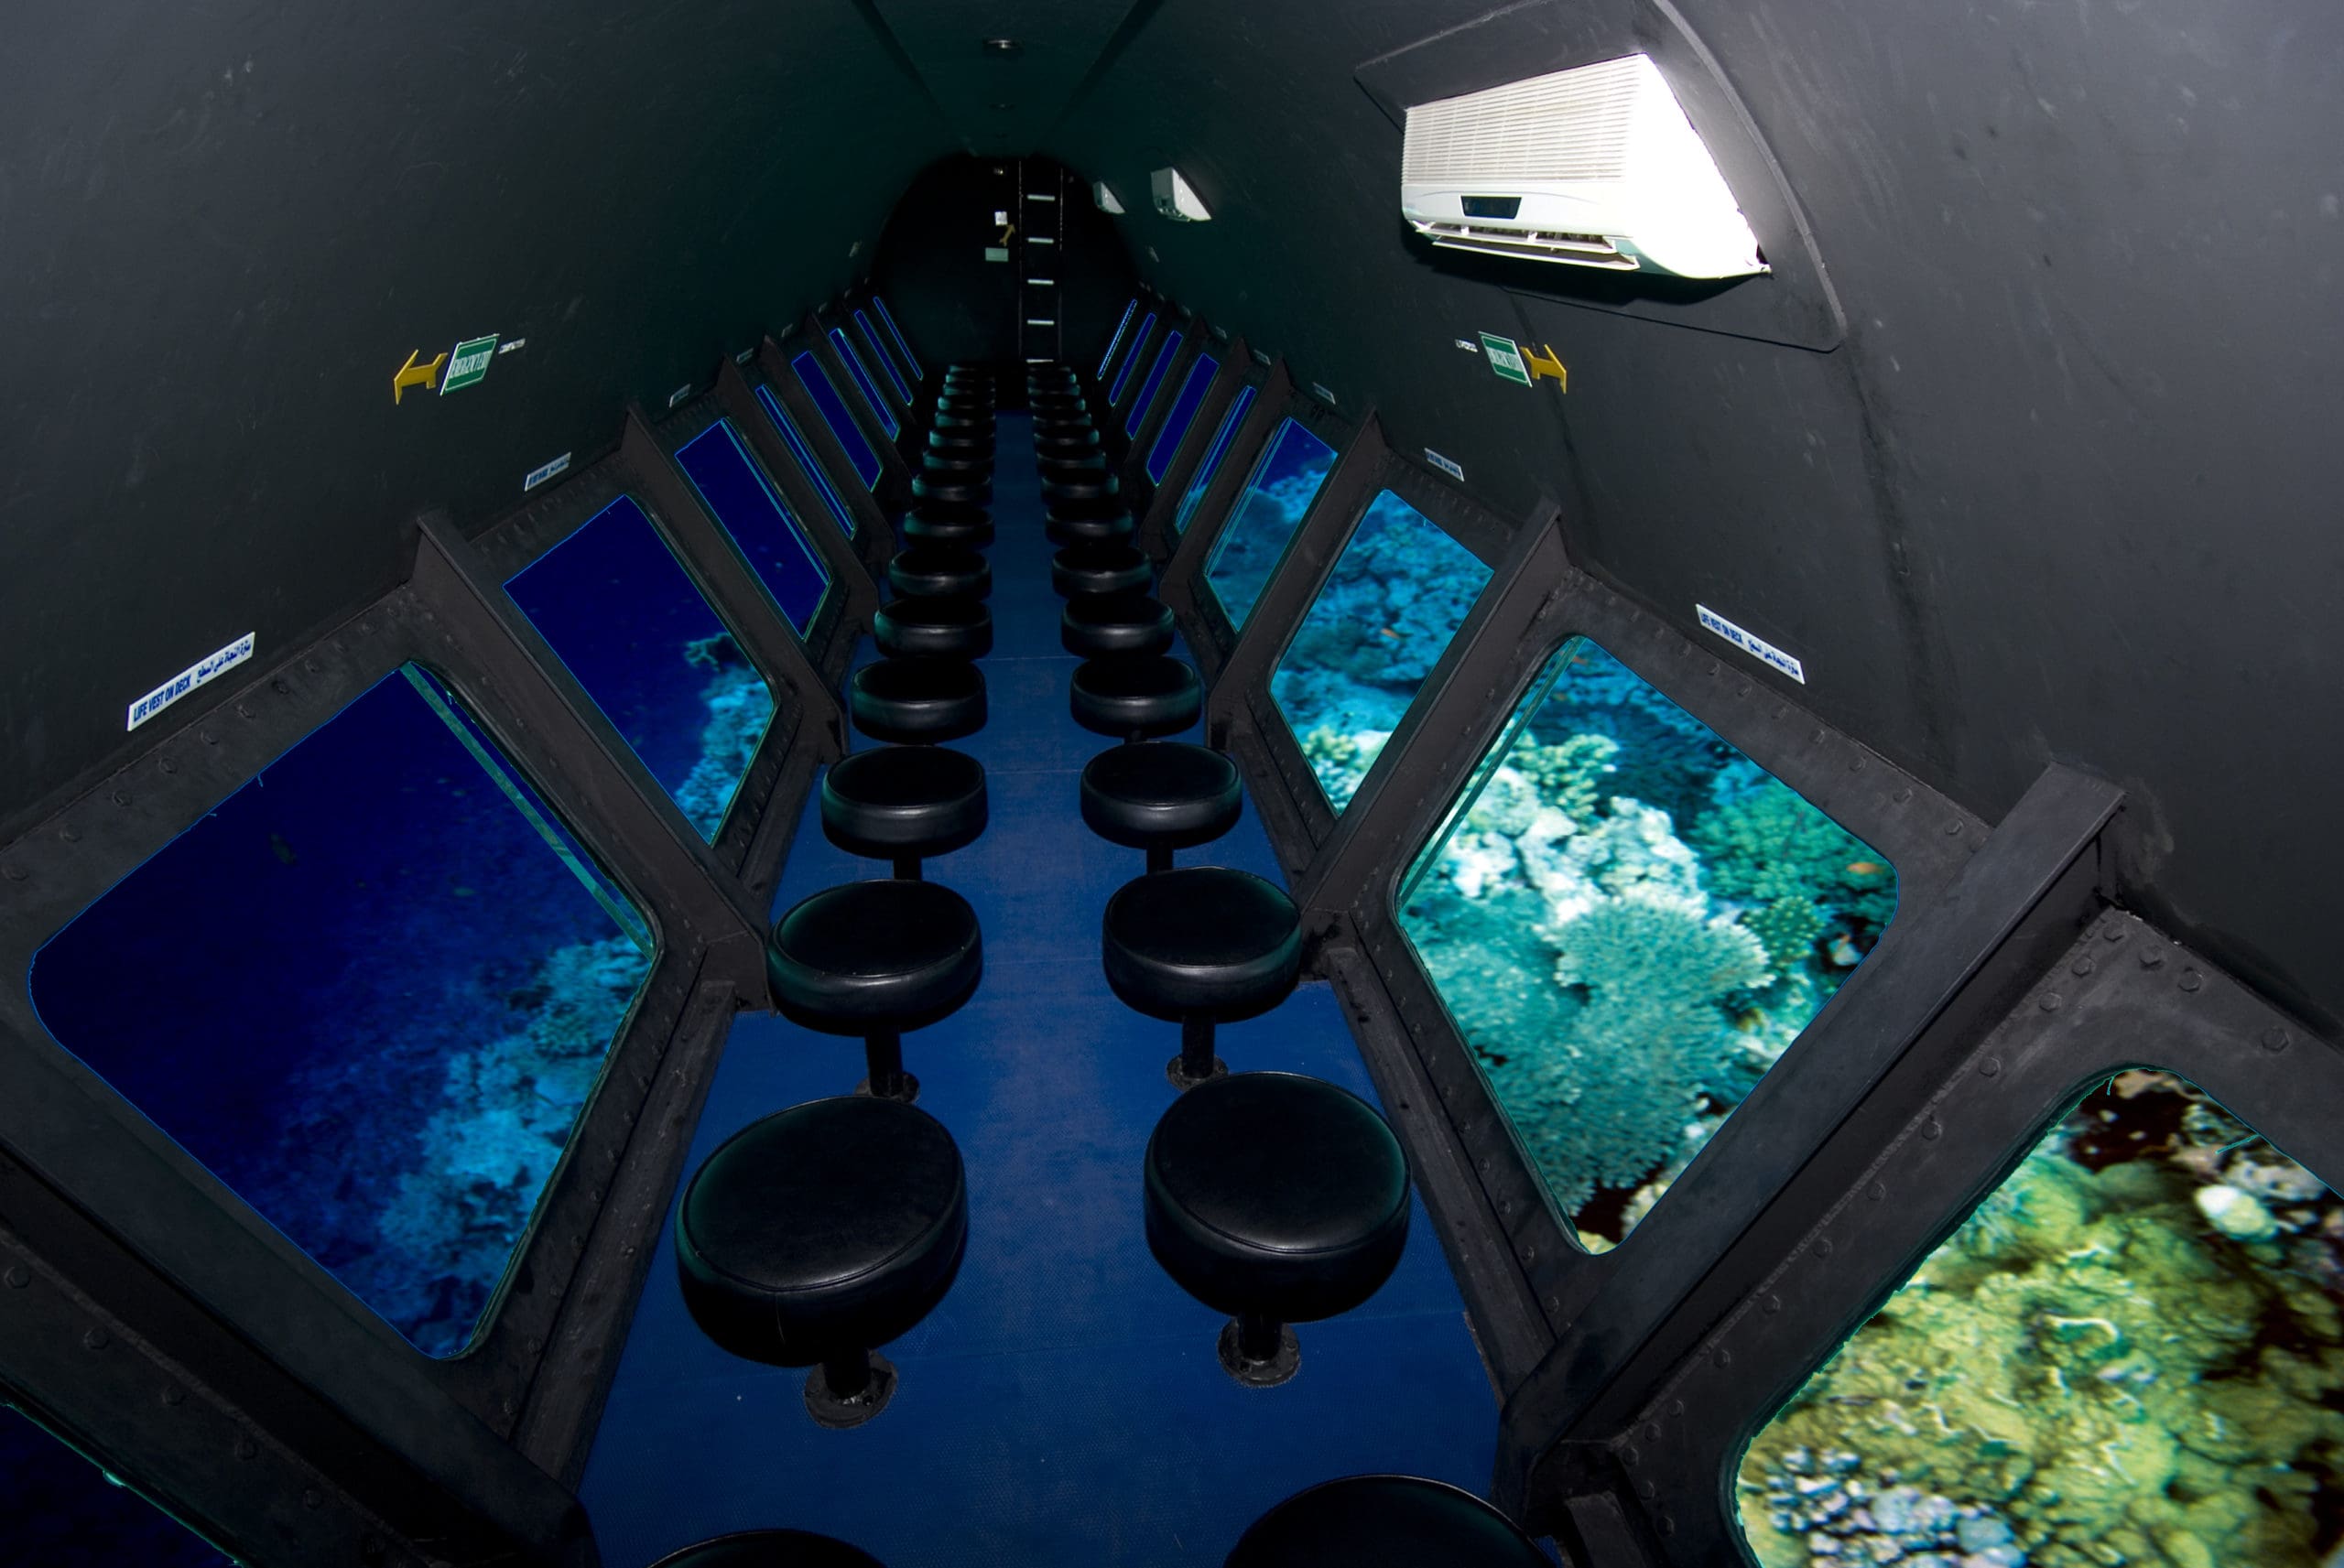 From Hurghada: Sea Wolf Glass-Submarine. - Trivaeg